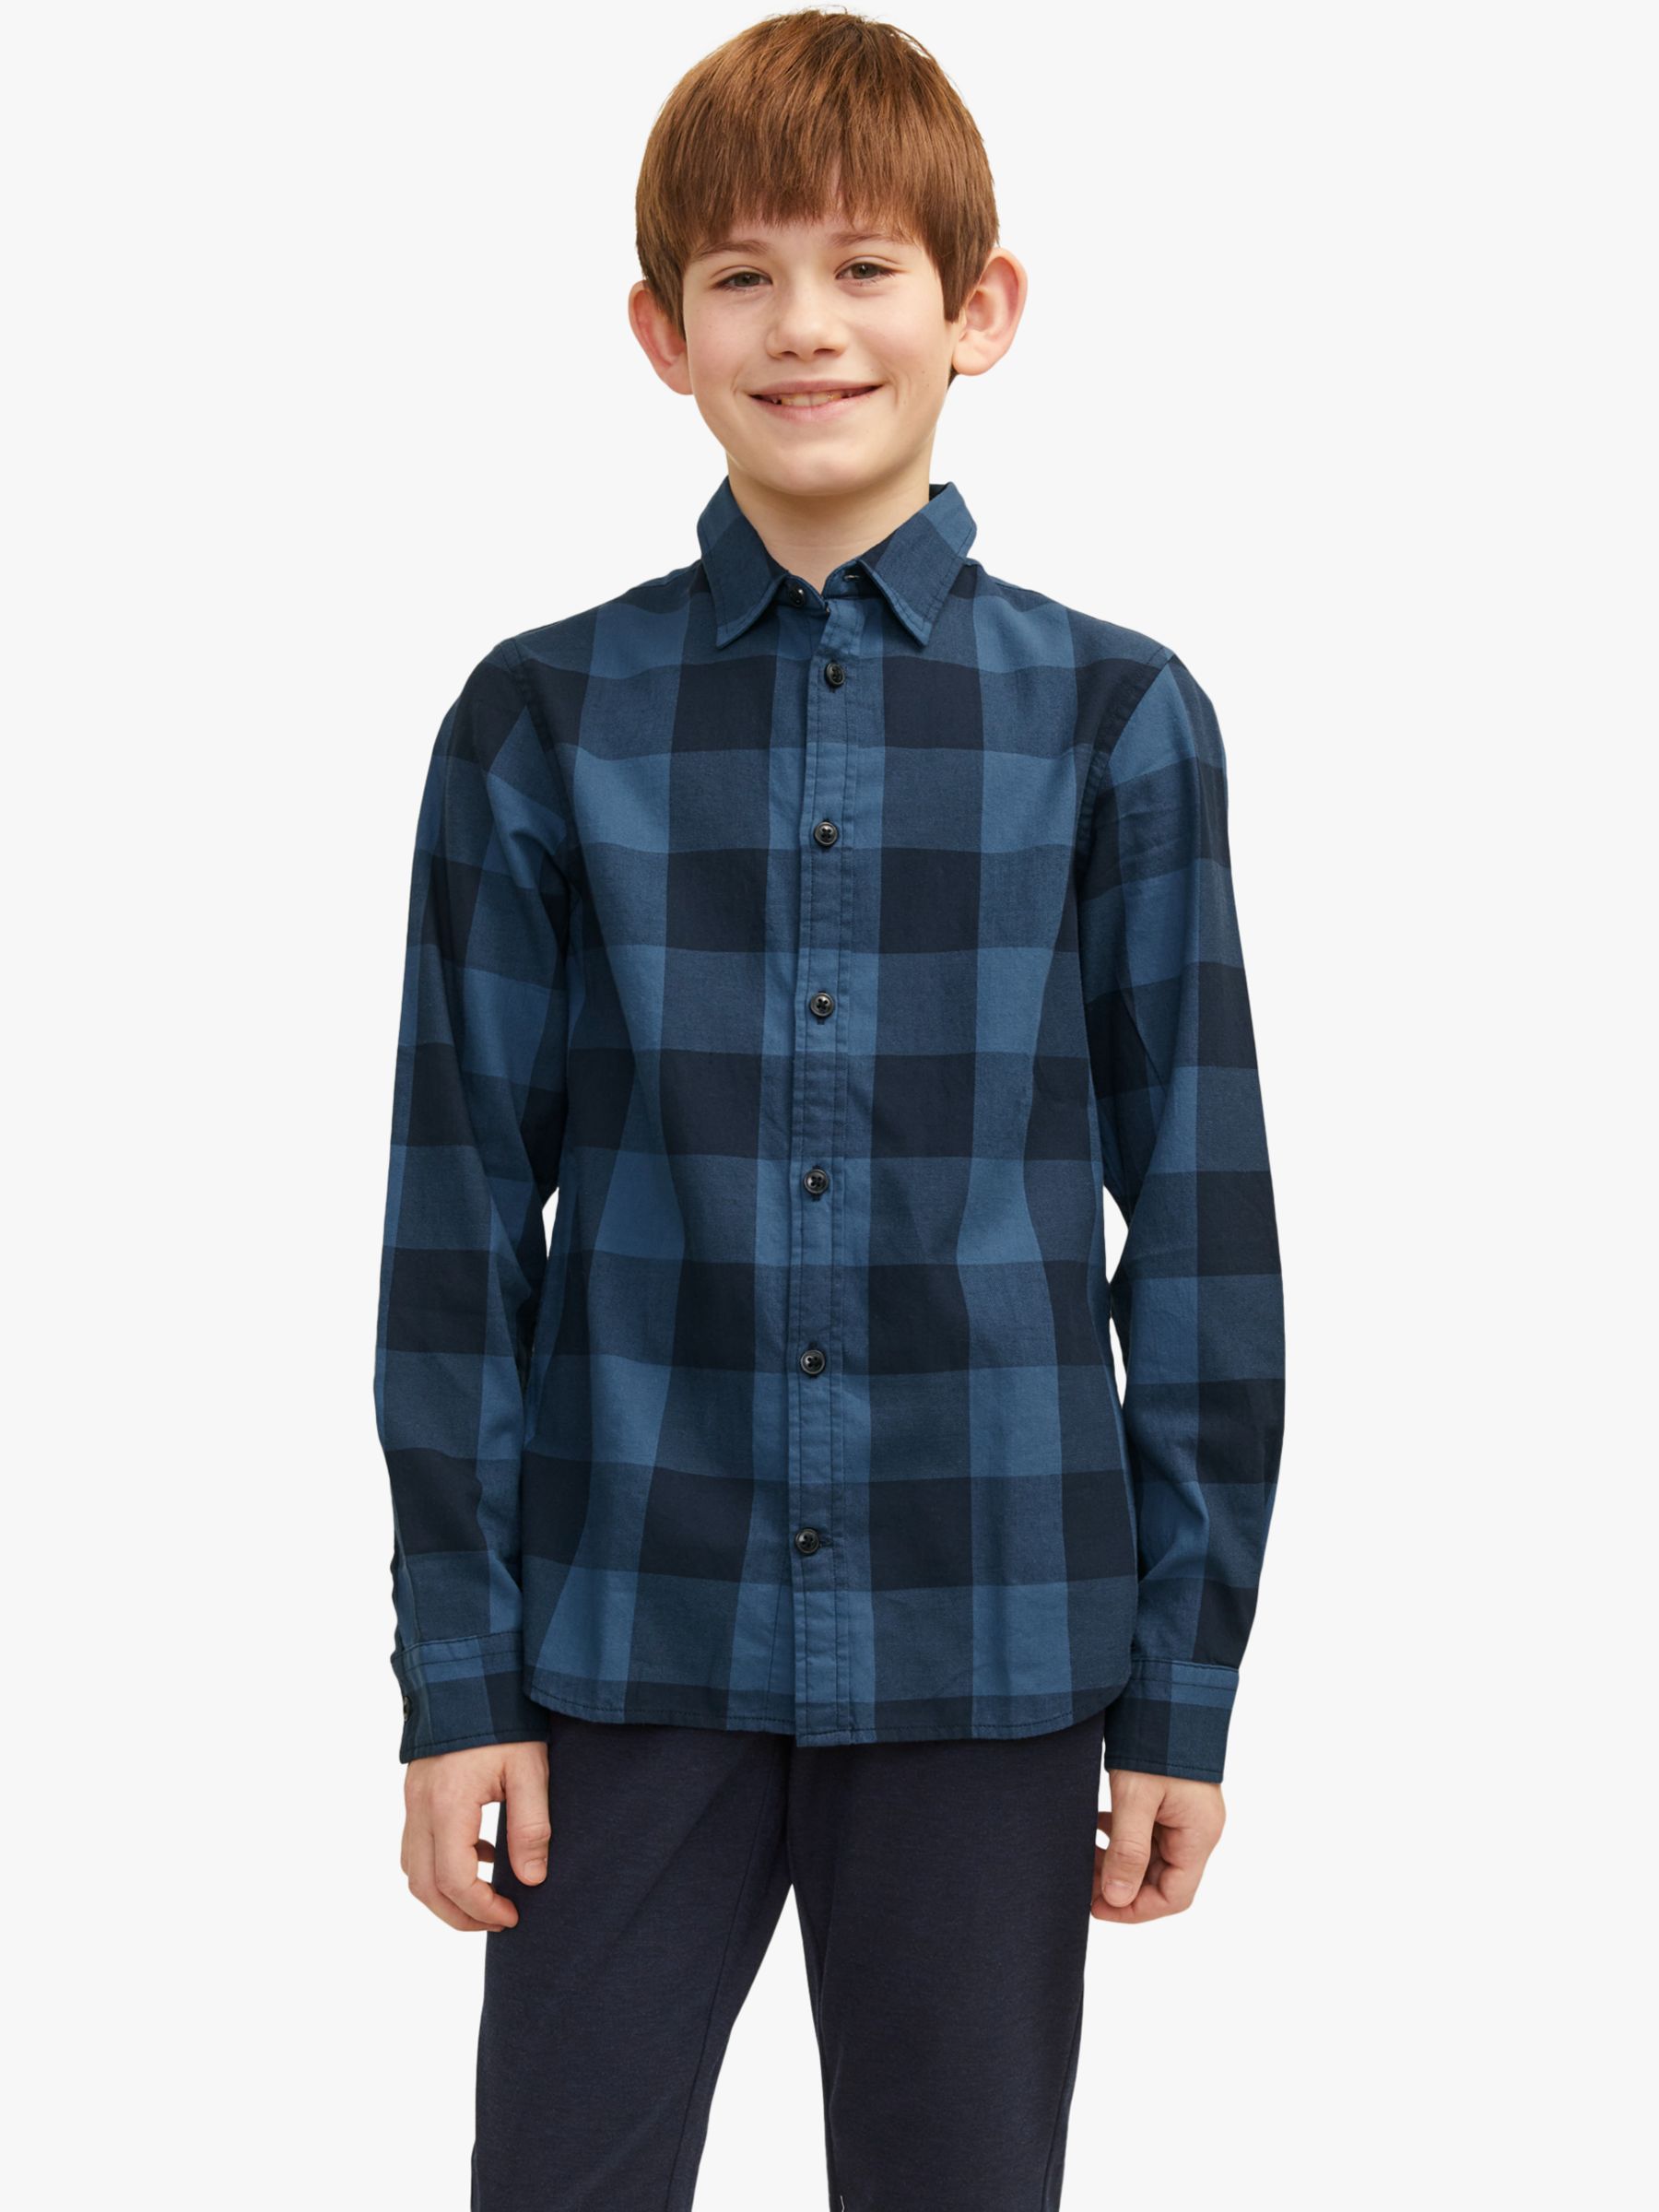 Jack & Jones Kids' Cotton Gingham Long Sleeve Shirt, Ensign Blue, 6 years